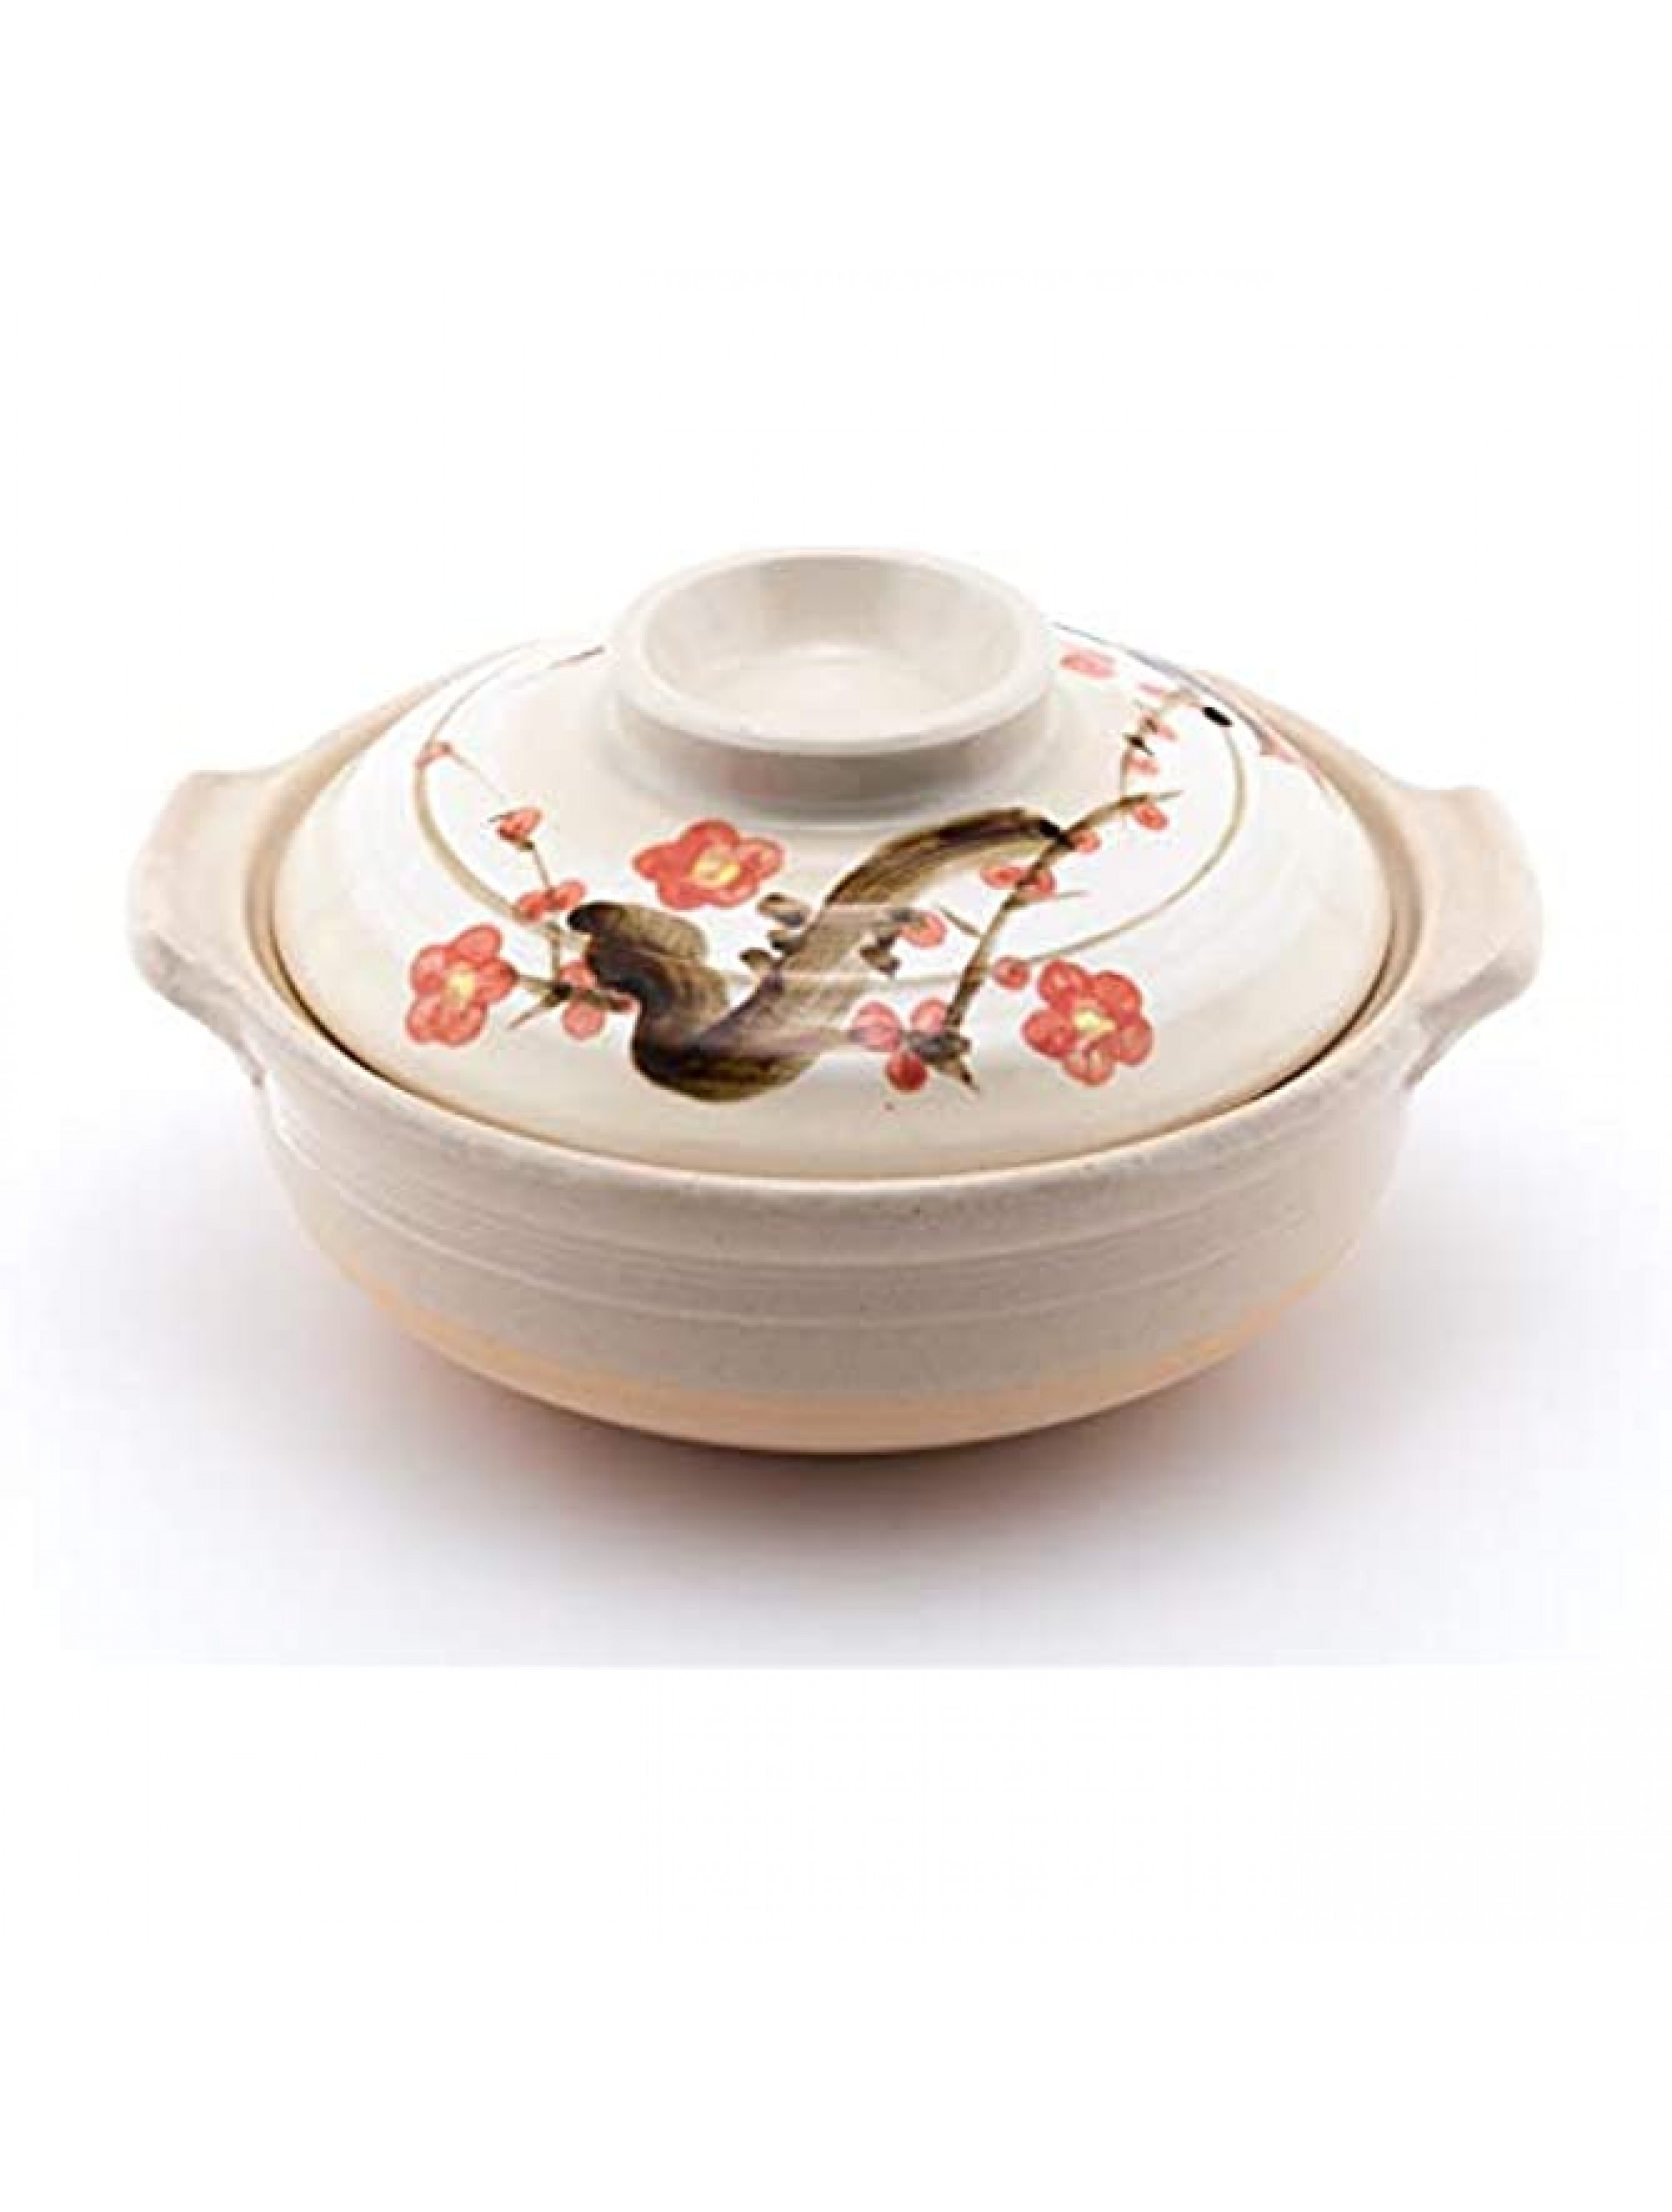 Japanese Sakura Donabe Ceramic Hot Pot Casserole 72 oz Earthenware Clay Pot Serves 3-4 People Made In Japan - BMSCHNR32